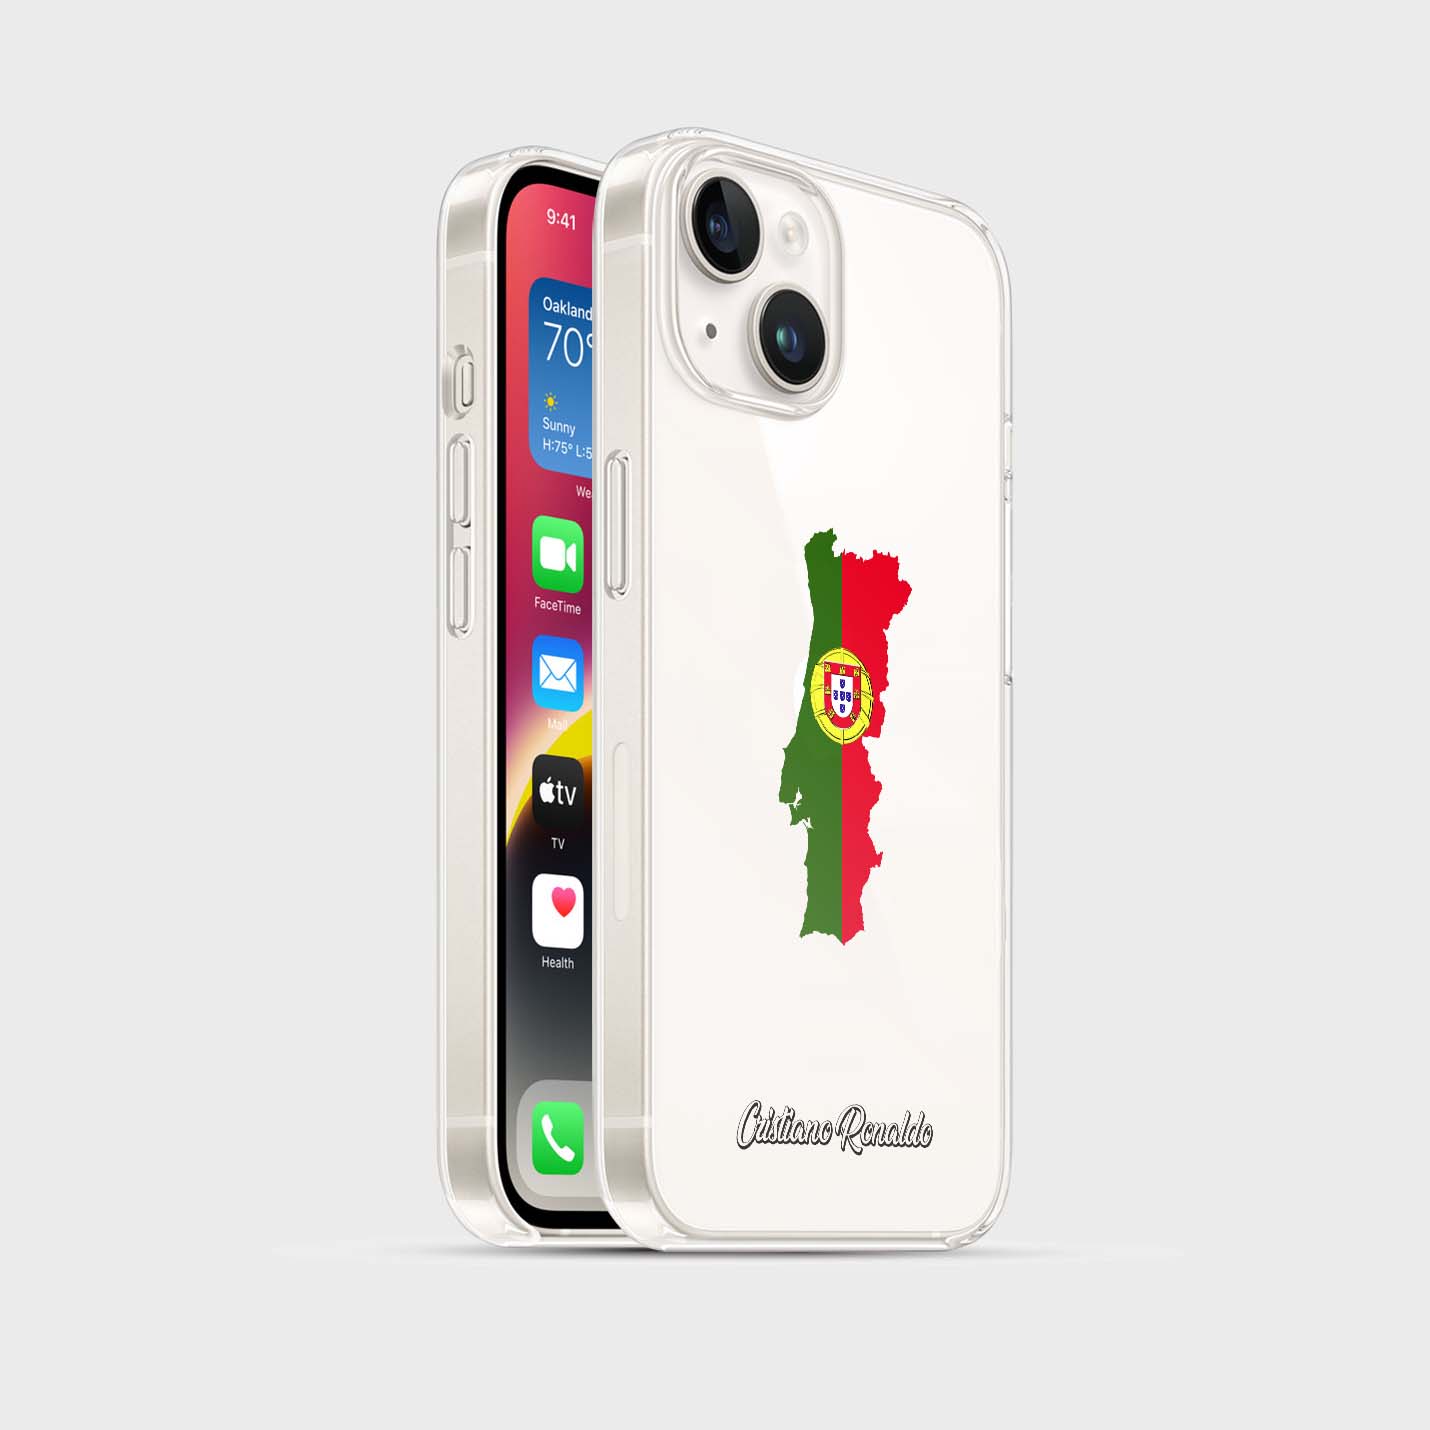 Handyhüllen mit Flagge - Portugal - 1instaphone